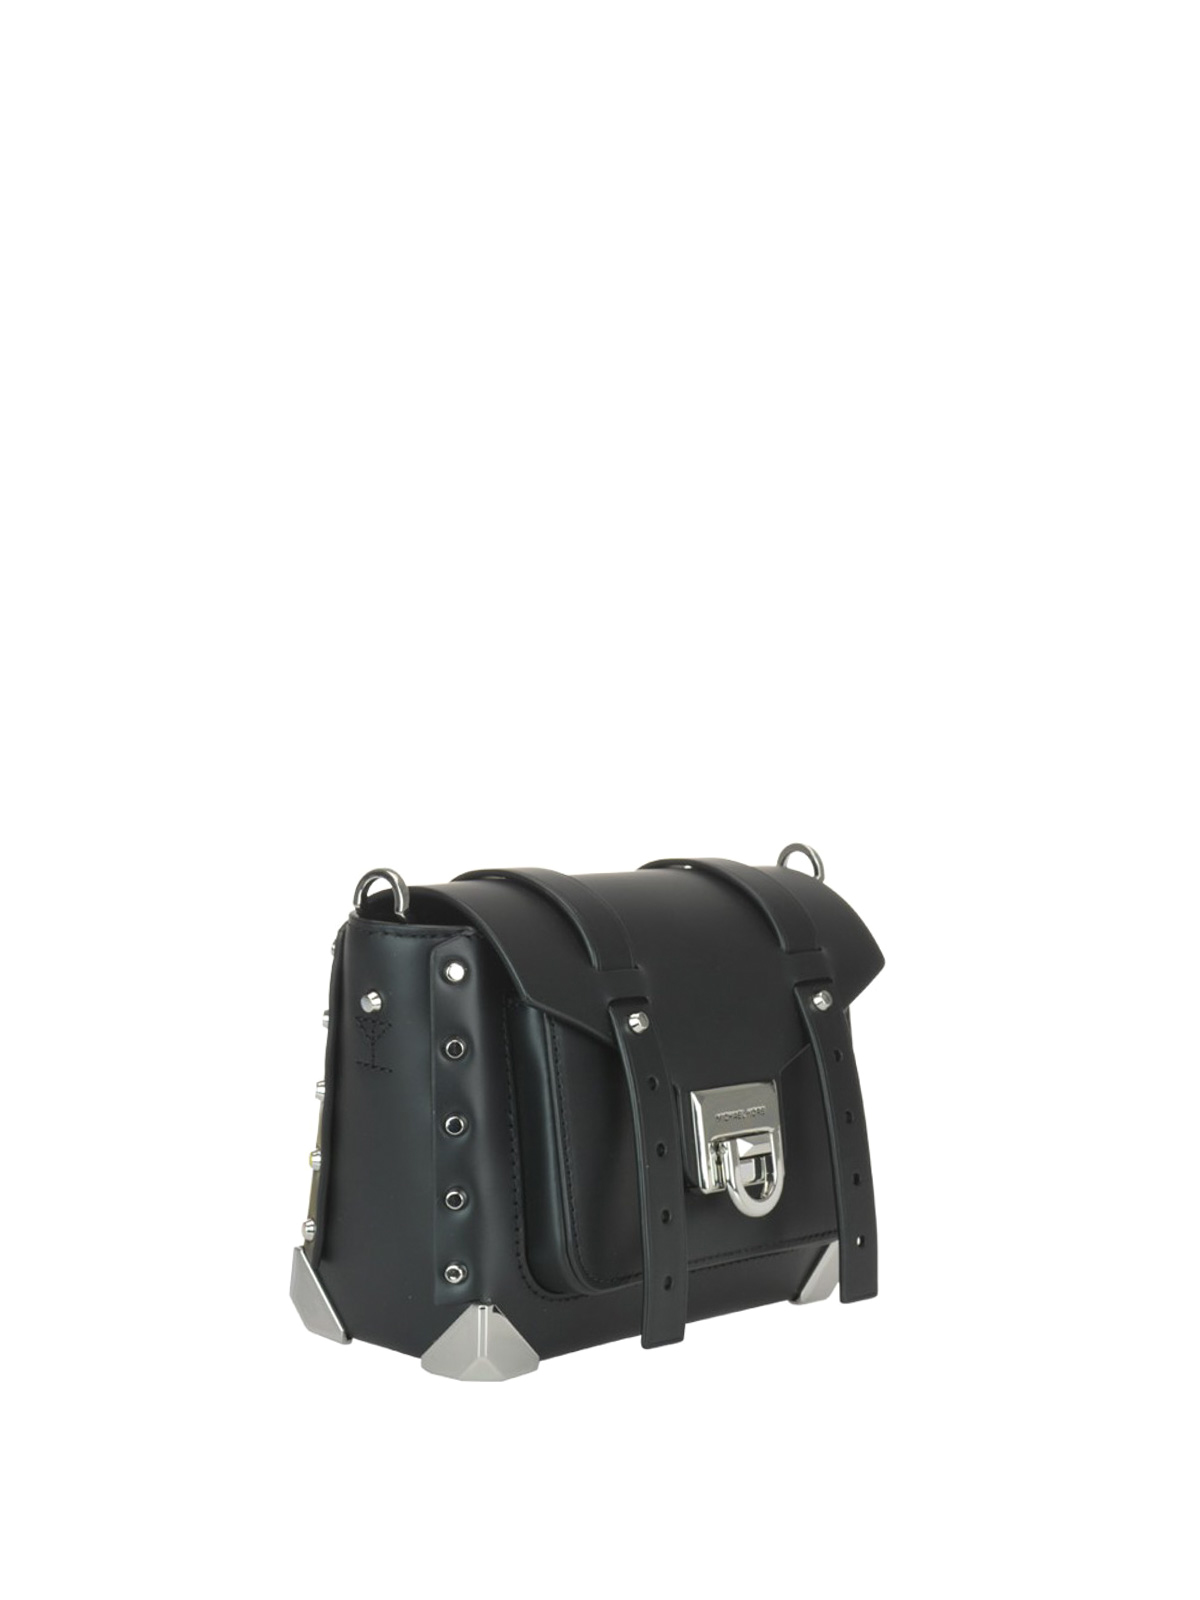 Cross body bags Michael Kors - Manhattan small leather cross body bag -  30T9SNCM1L001